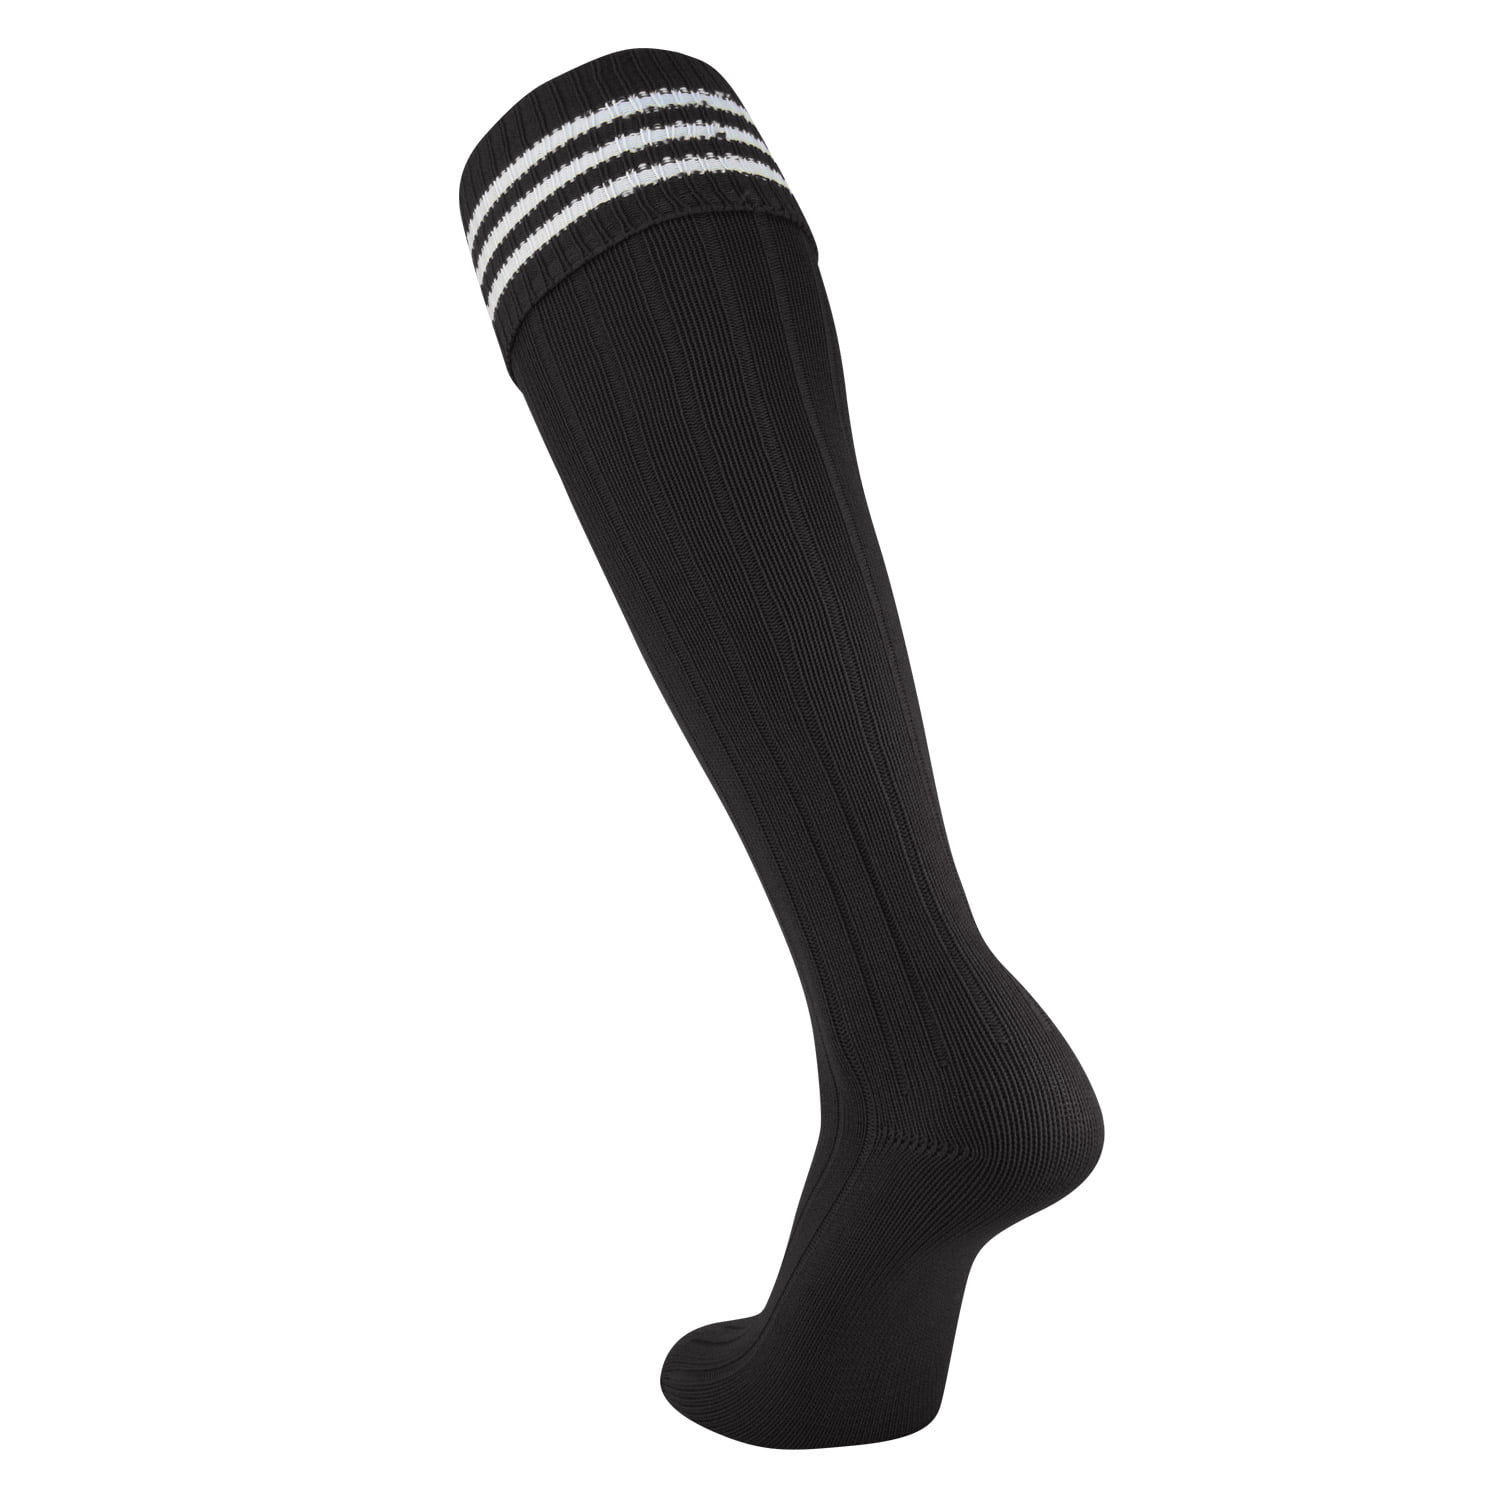 TCK European Style 3 Stripe Soccer Socks in Nylon - Walmart.com